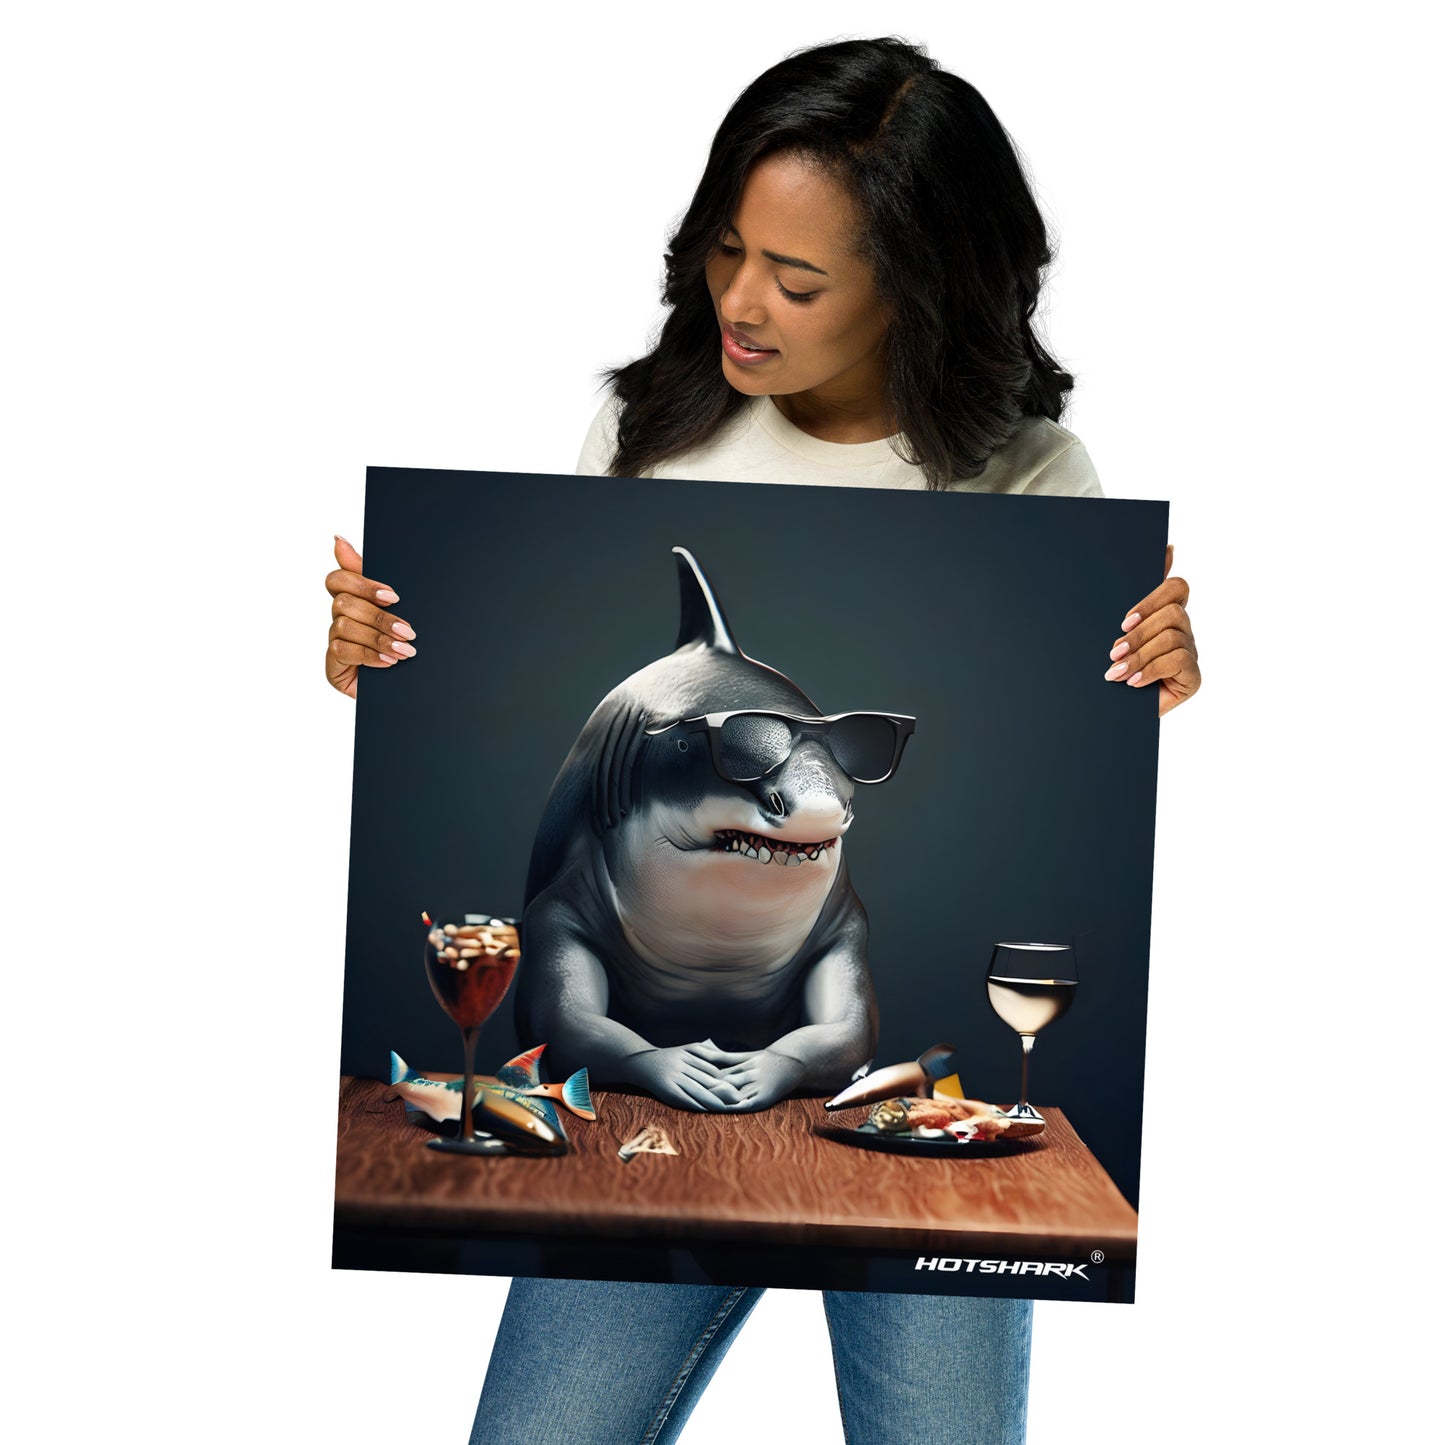 Restaurant Hungry Shark - Poster